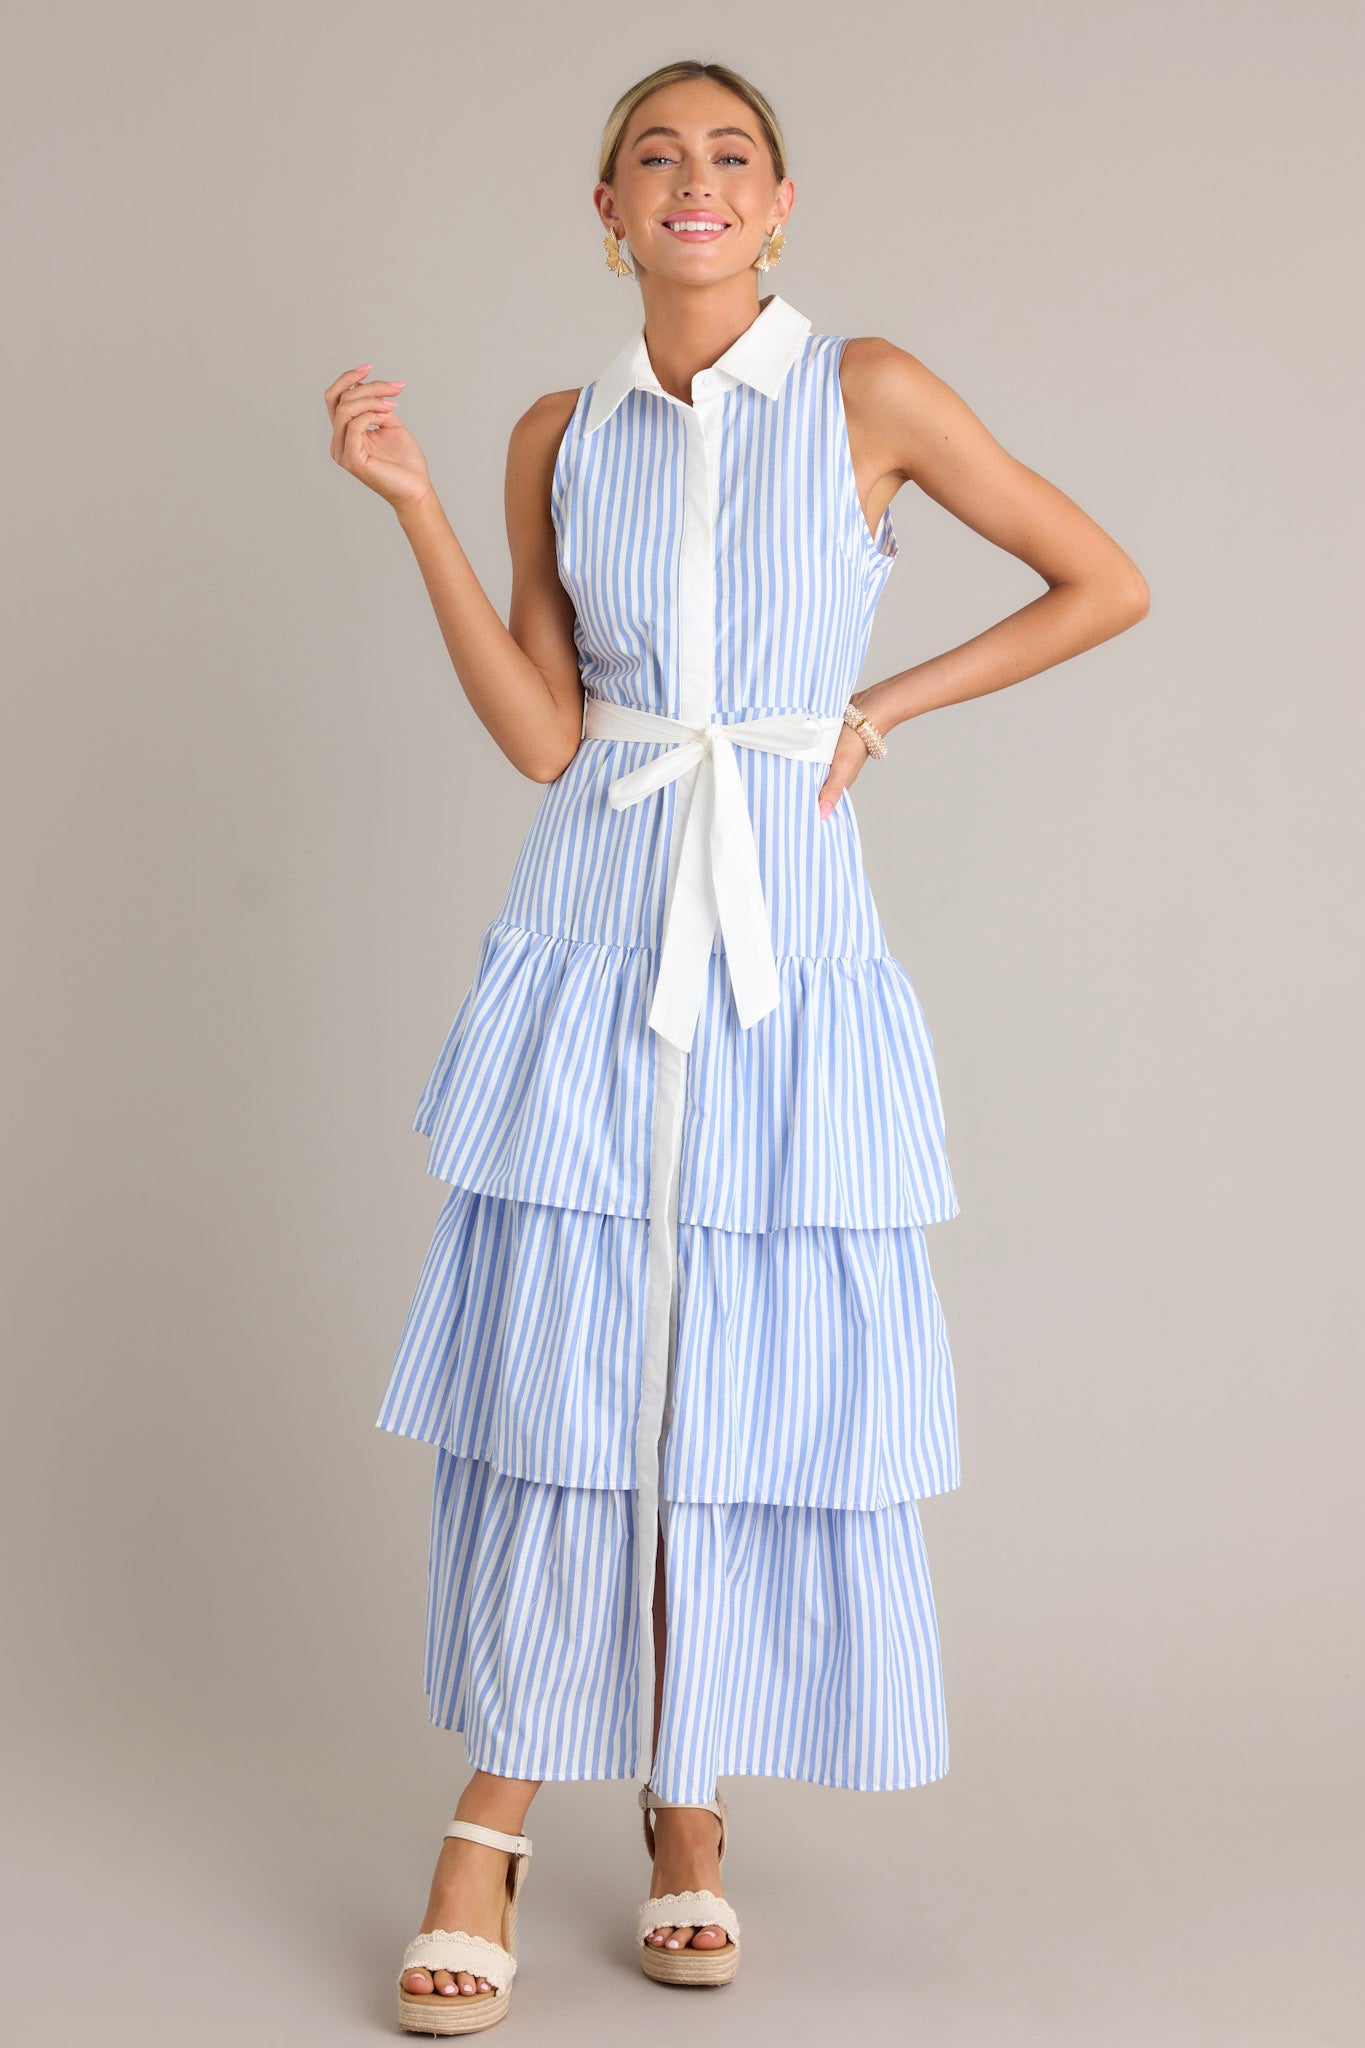 This blue stripe maxi dress features a collared neckline, a button front, an elastic waist insert, a self-tie waist belt, and multiple tiers.